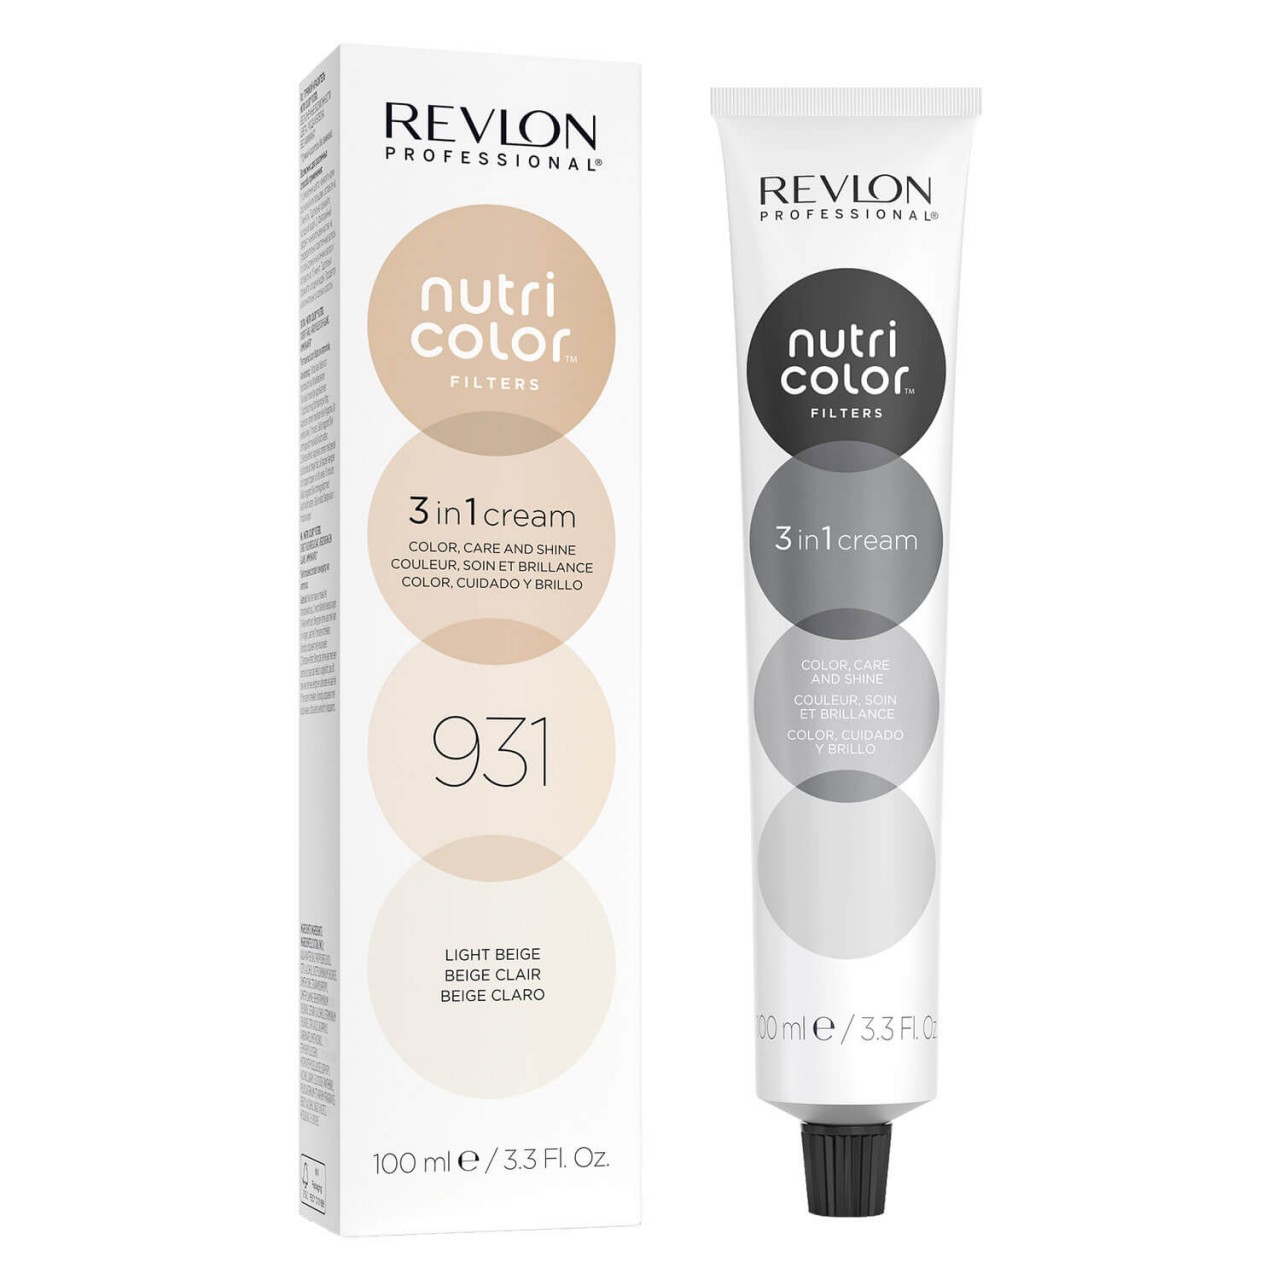 Nutri Color Creme - Light Beige 931 von Revlon Professional